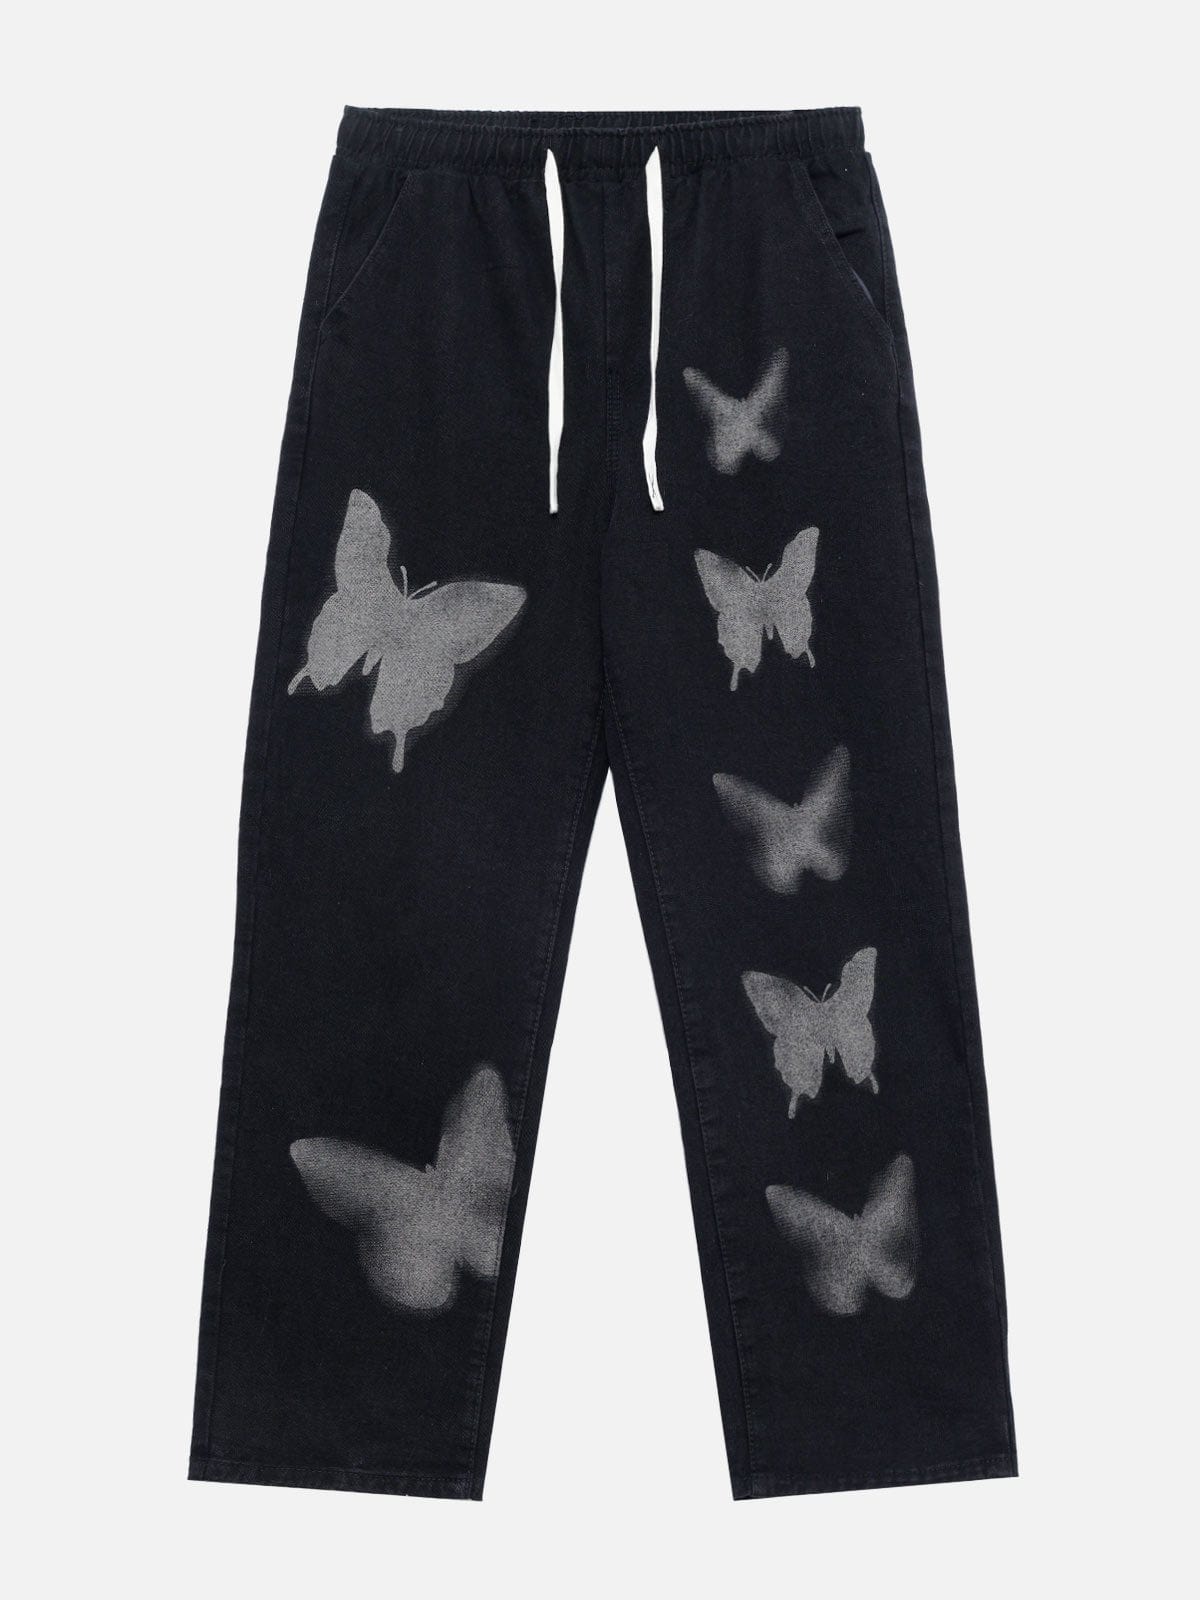 NEV Butterfly Print Elastic Waistband Jeans